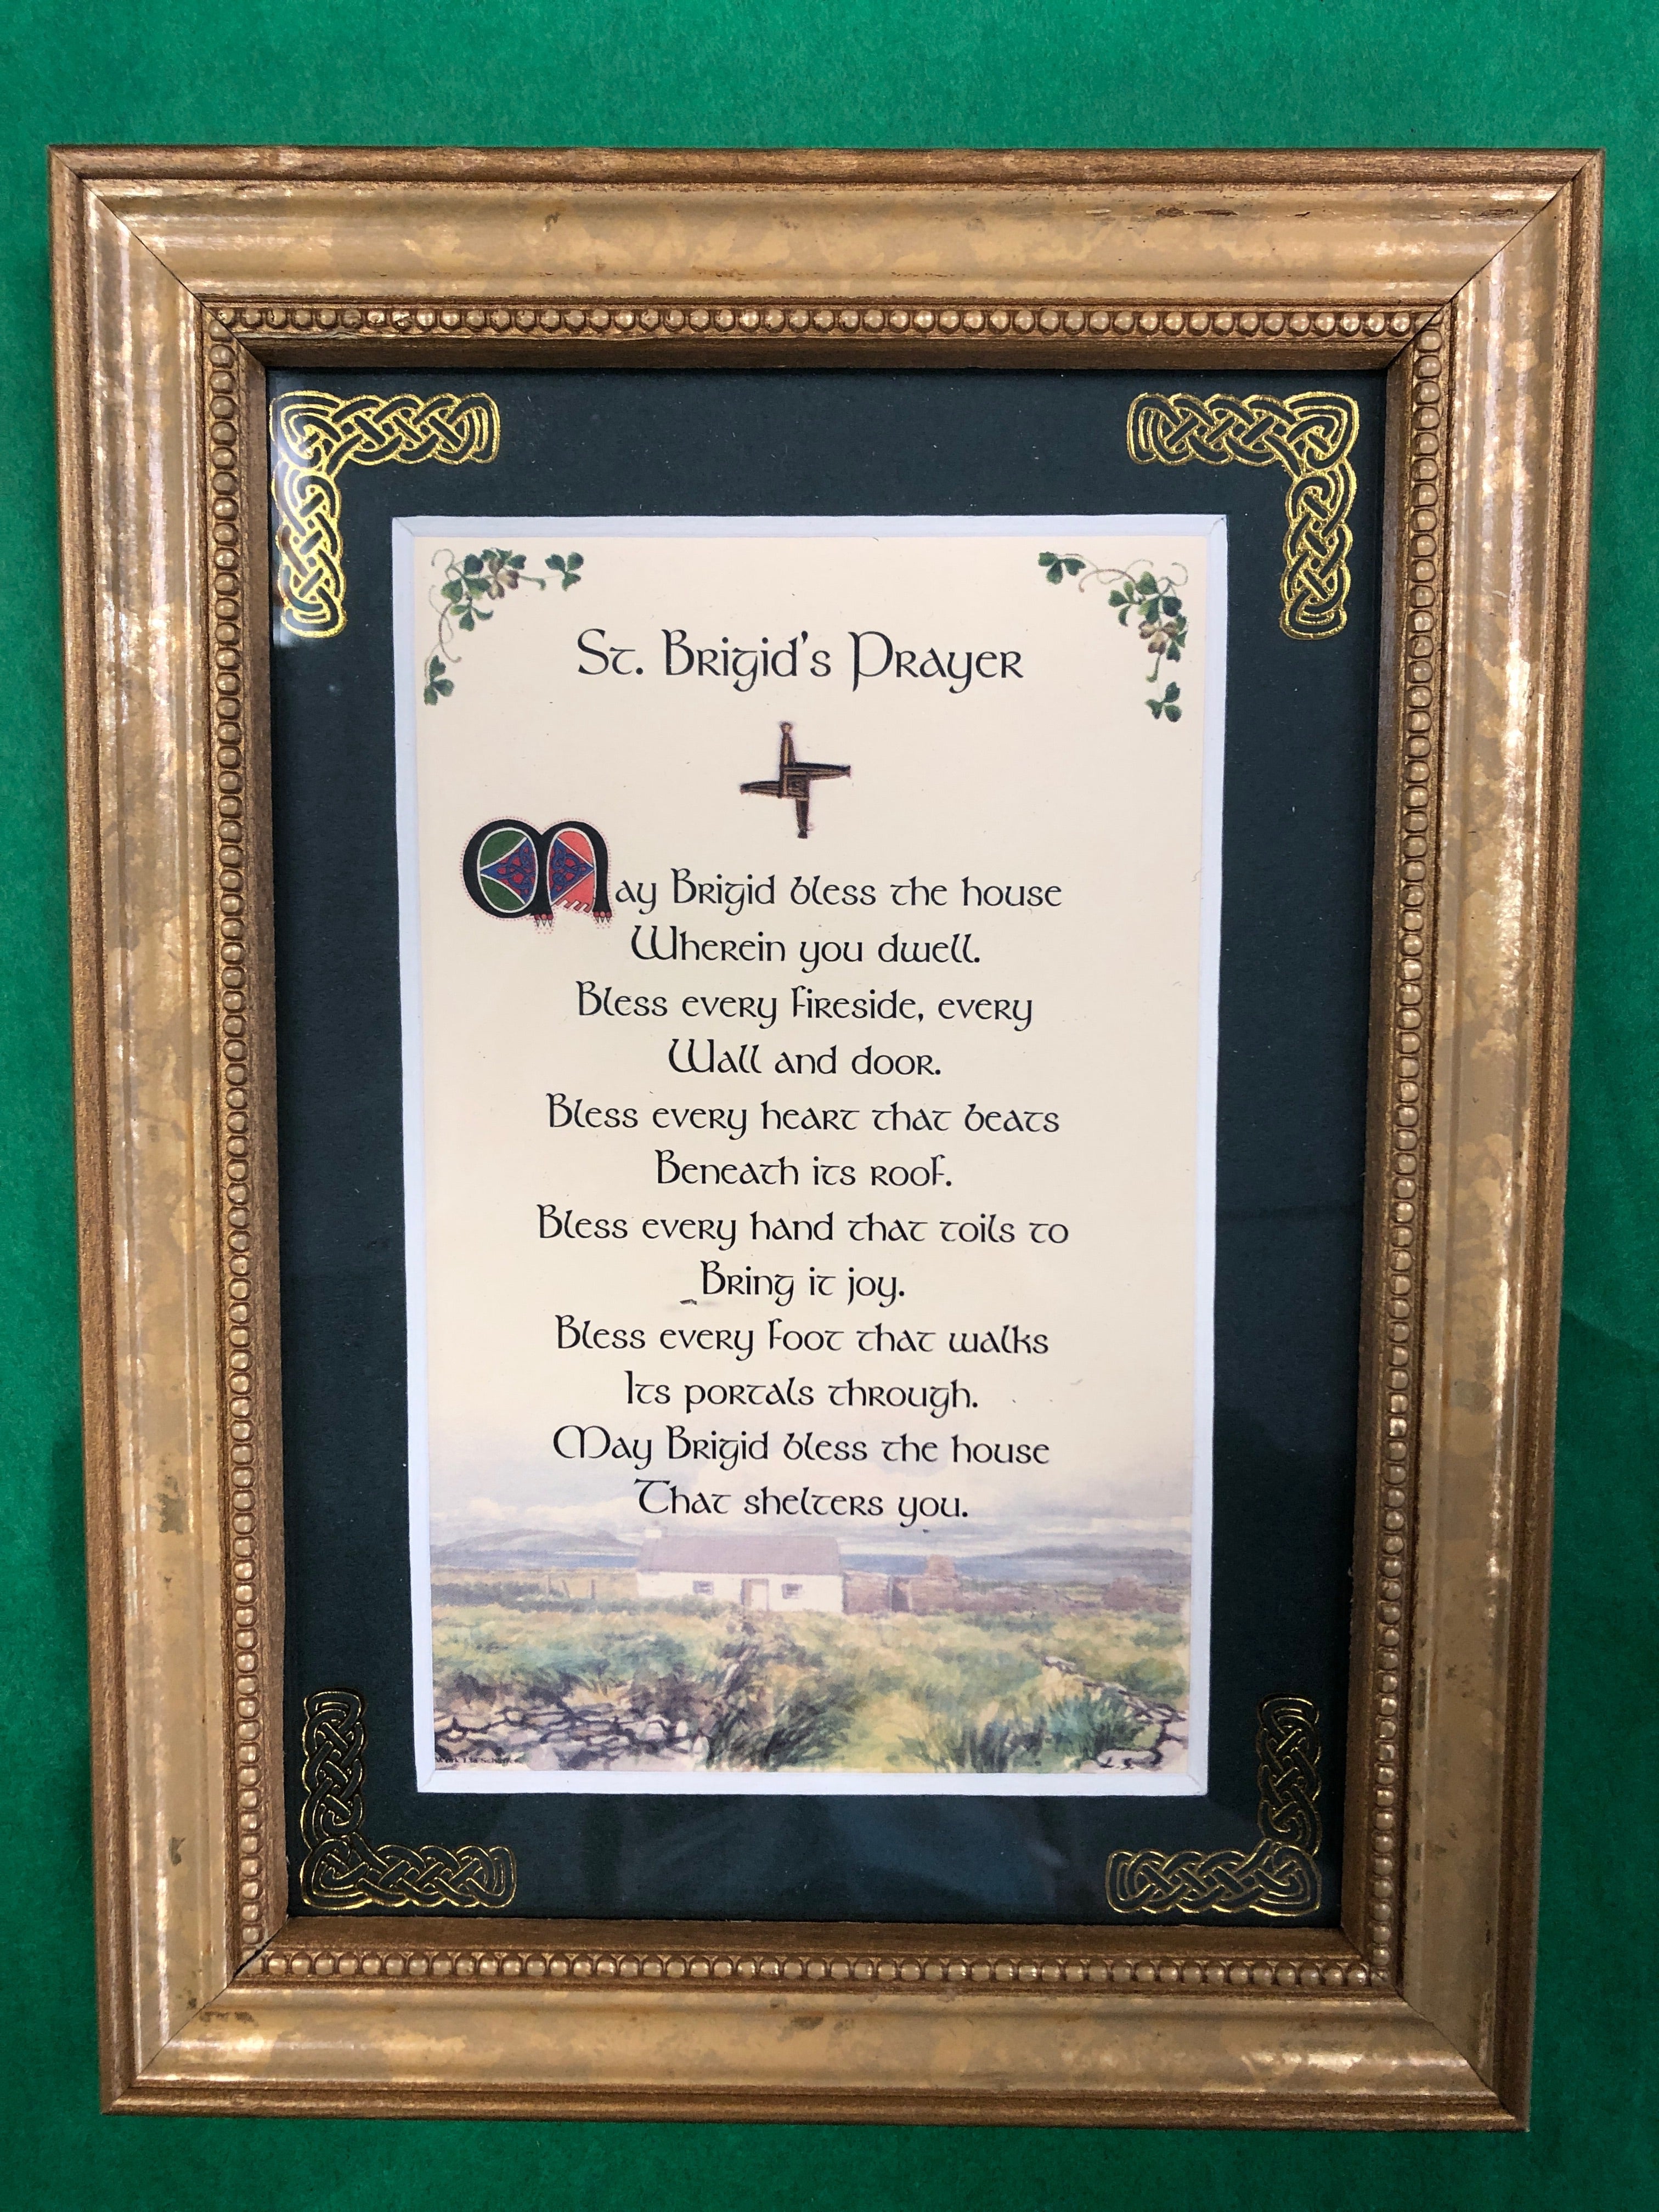 St. Brigid’s prayer framed